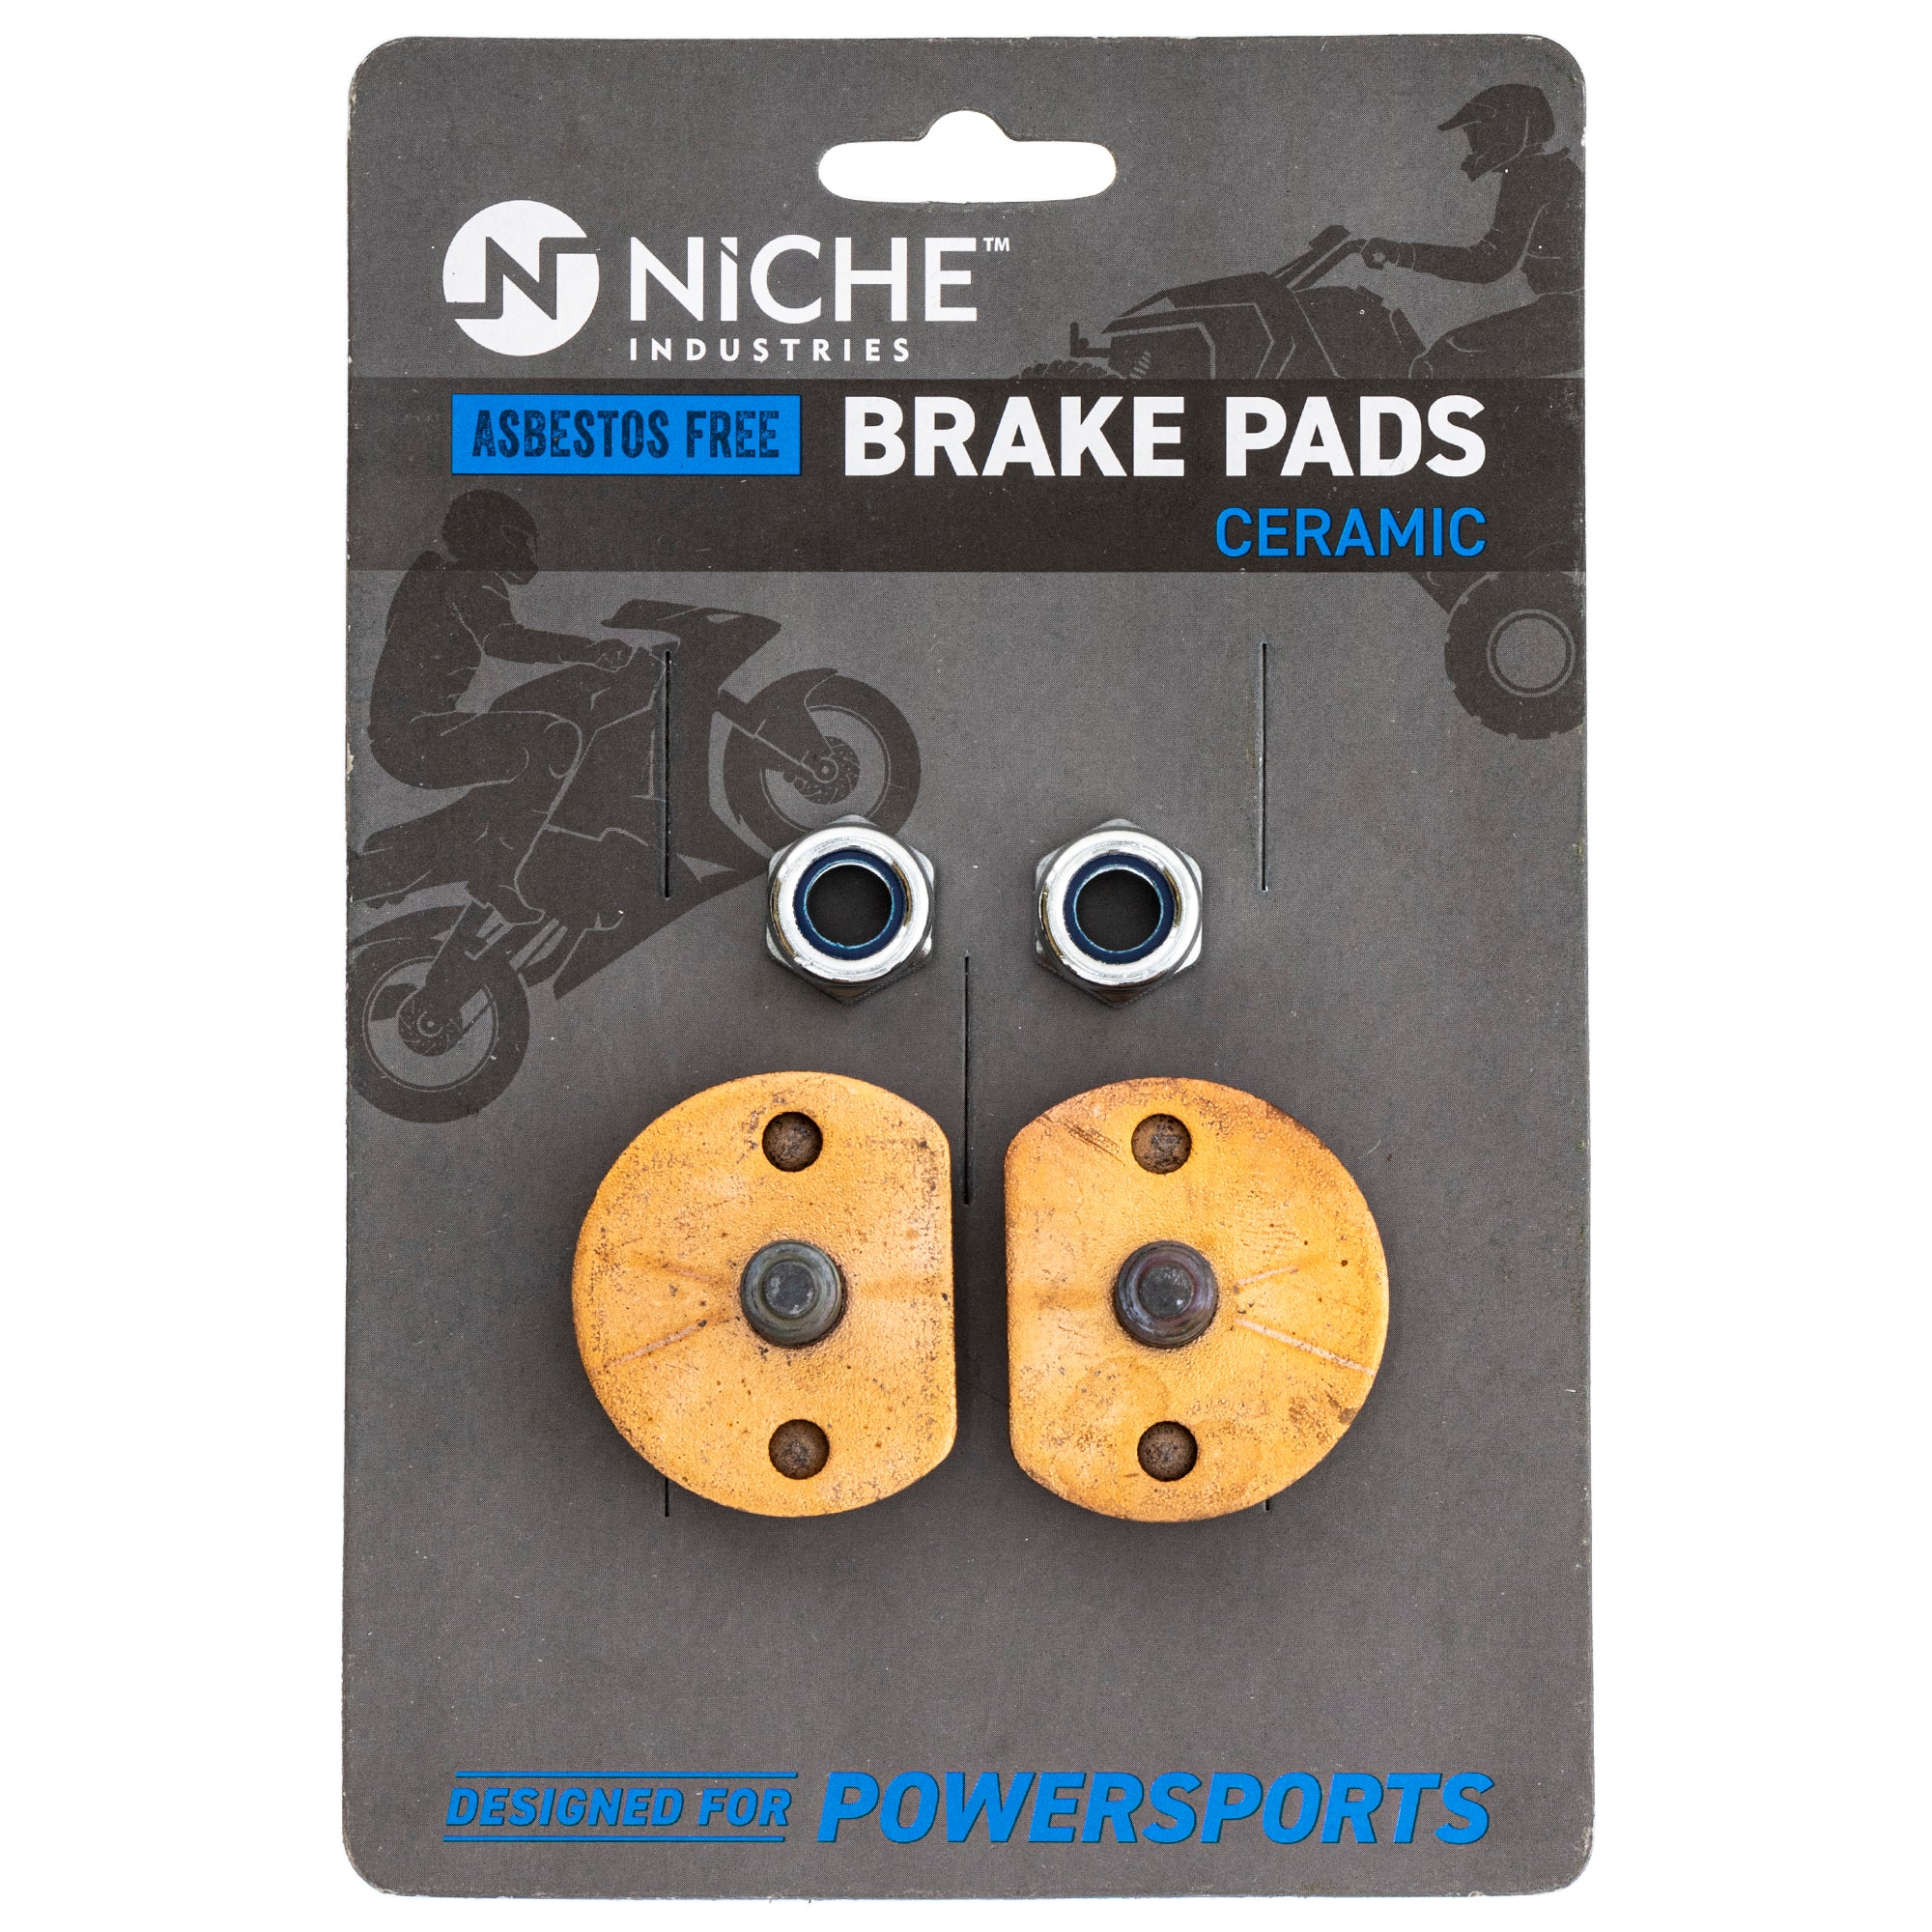 NICHE MK1002877 Ceramic Brake Pad Kit for BRP Can-Am Ski-Doo